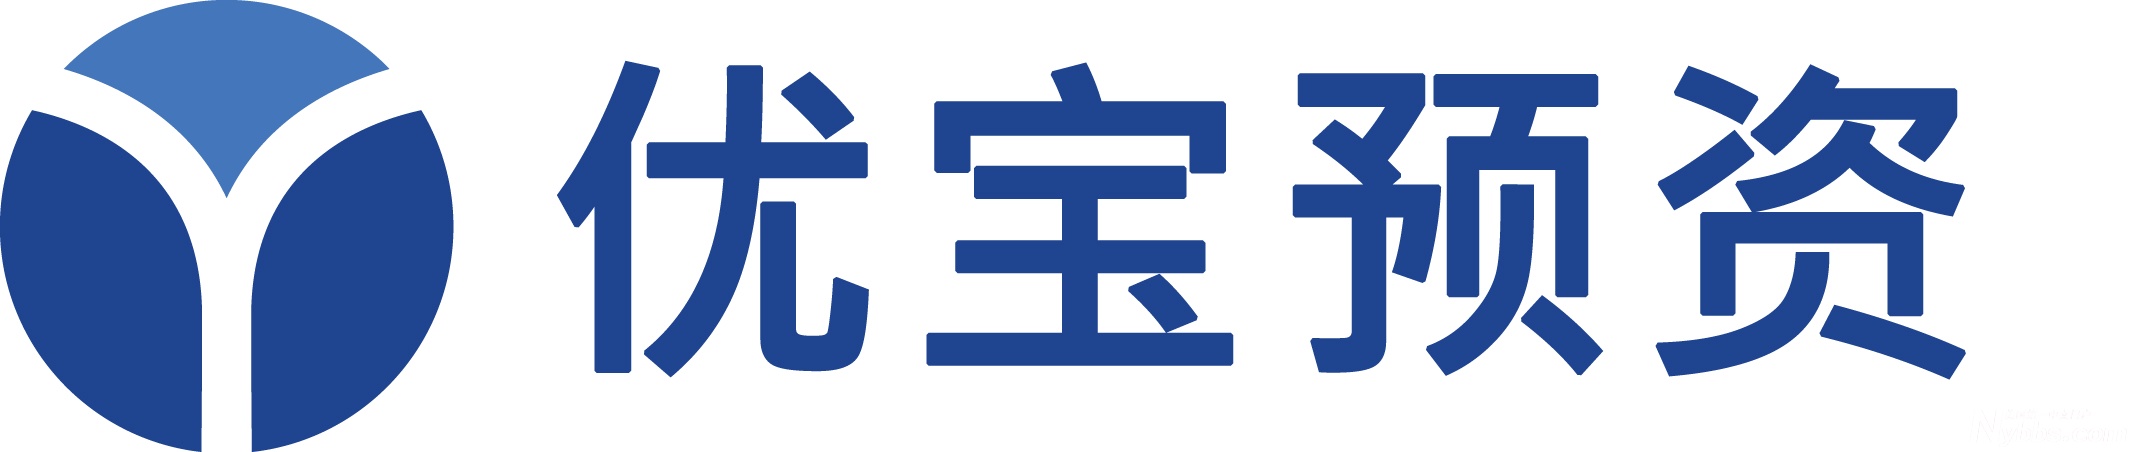 YalberChinese logo.jpg